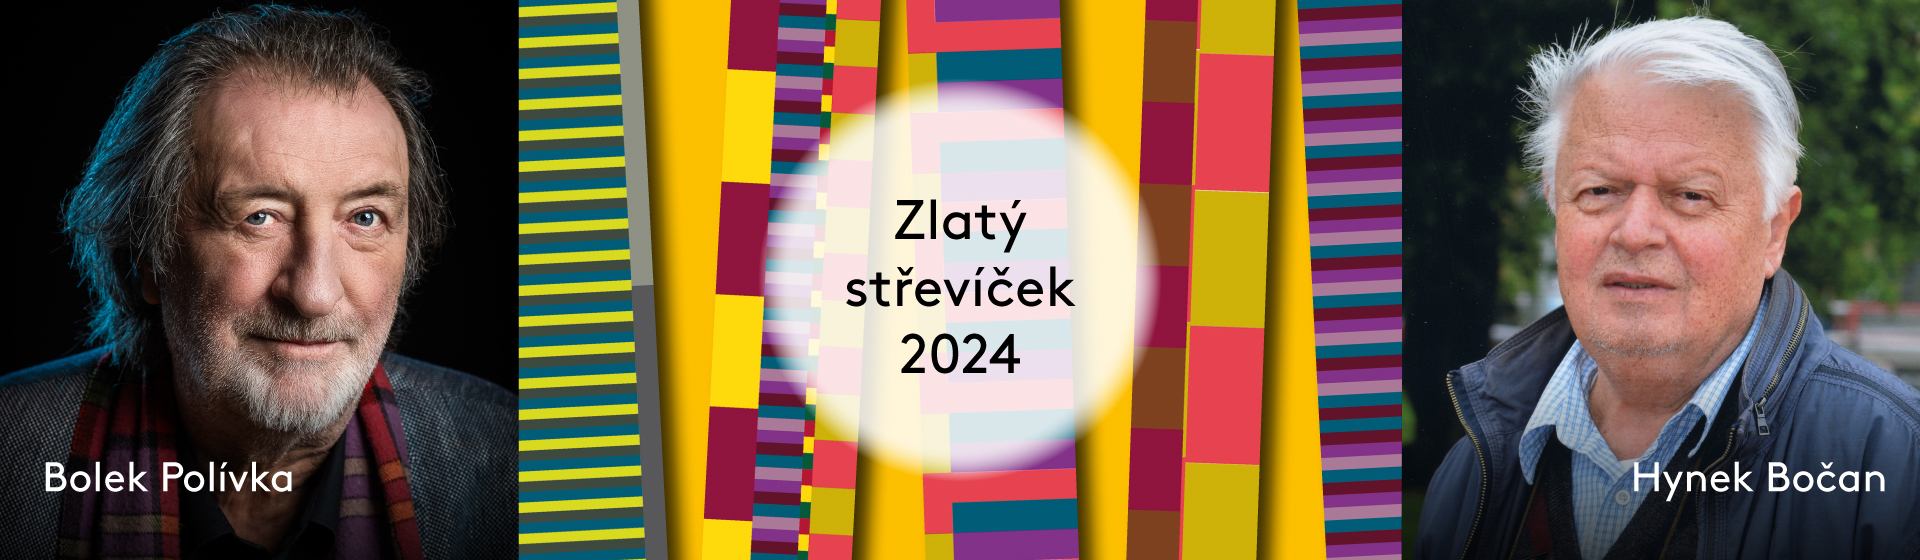 Zlín Film Festival 2024